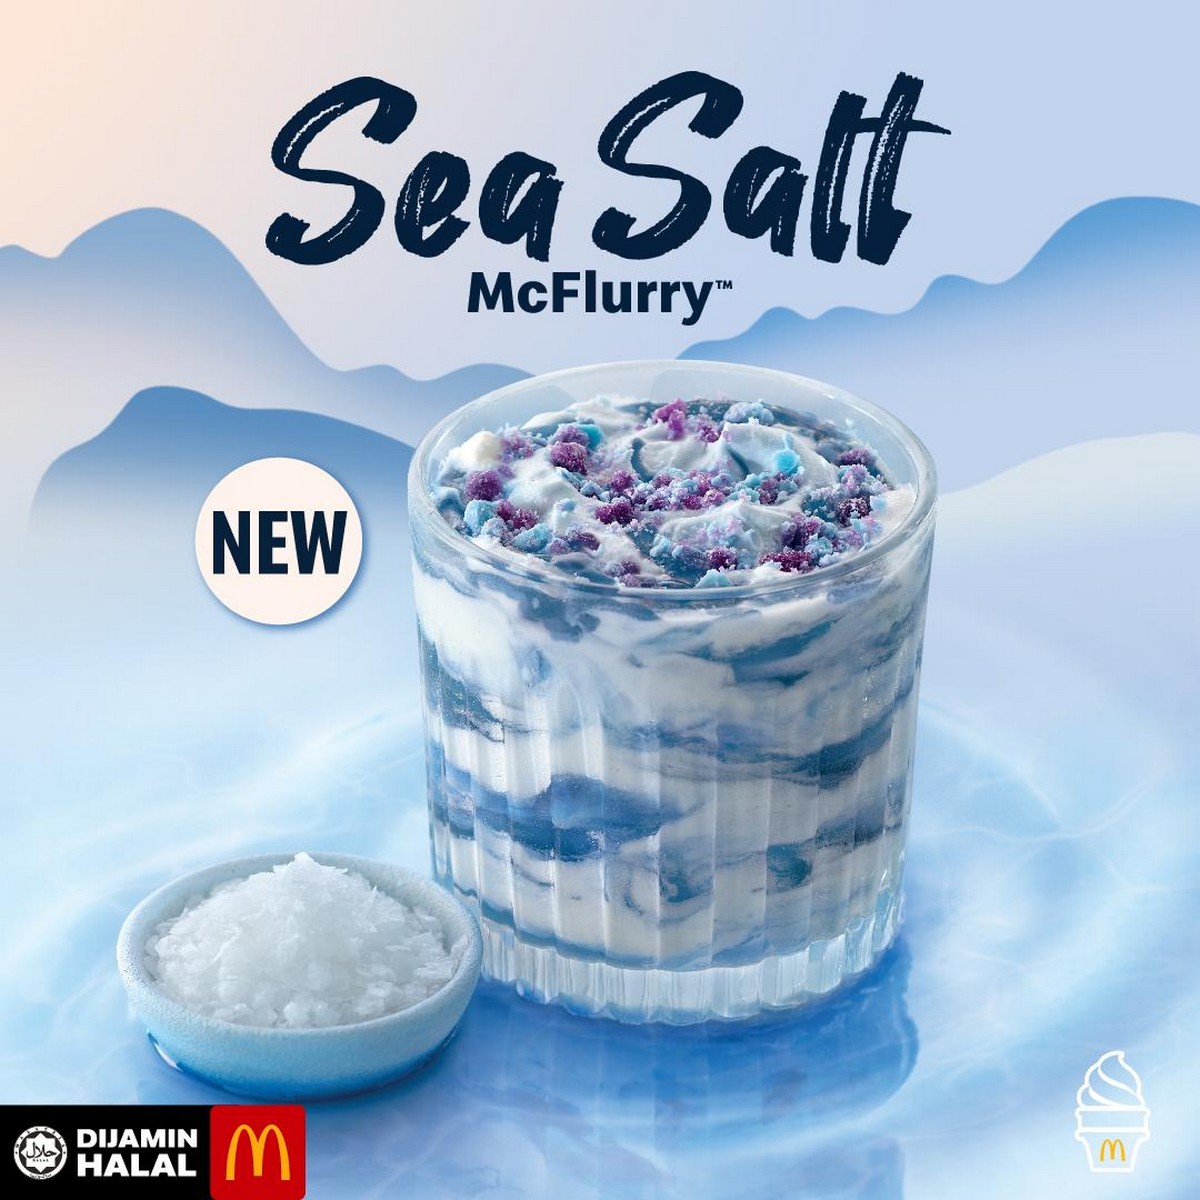 Mcdonalds Introduce New Sea Salt McFlurry Starting on 26 Oct onwards - EverydayOnSales.com News